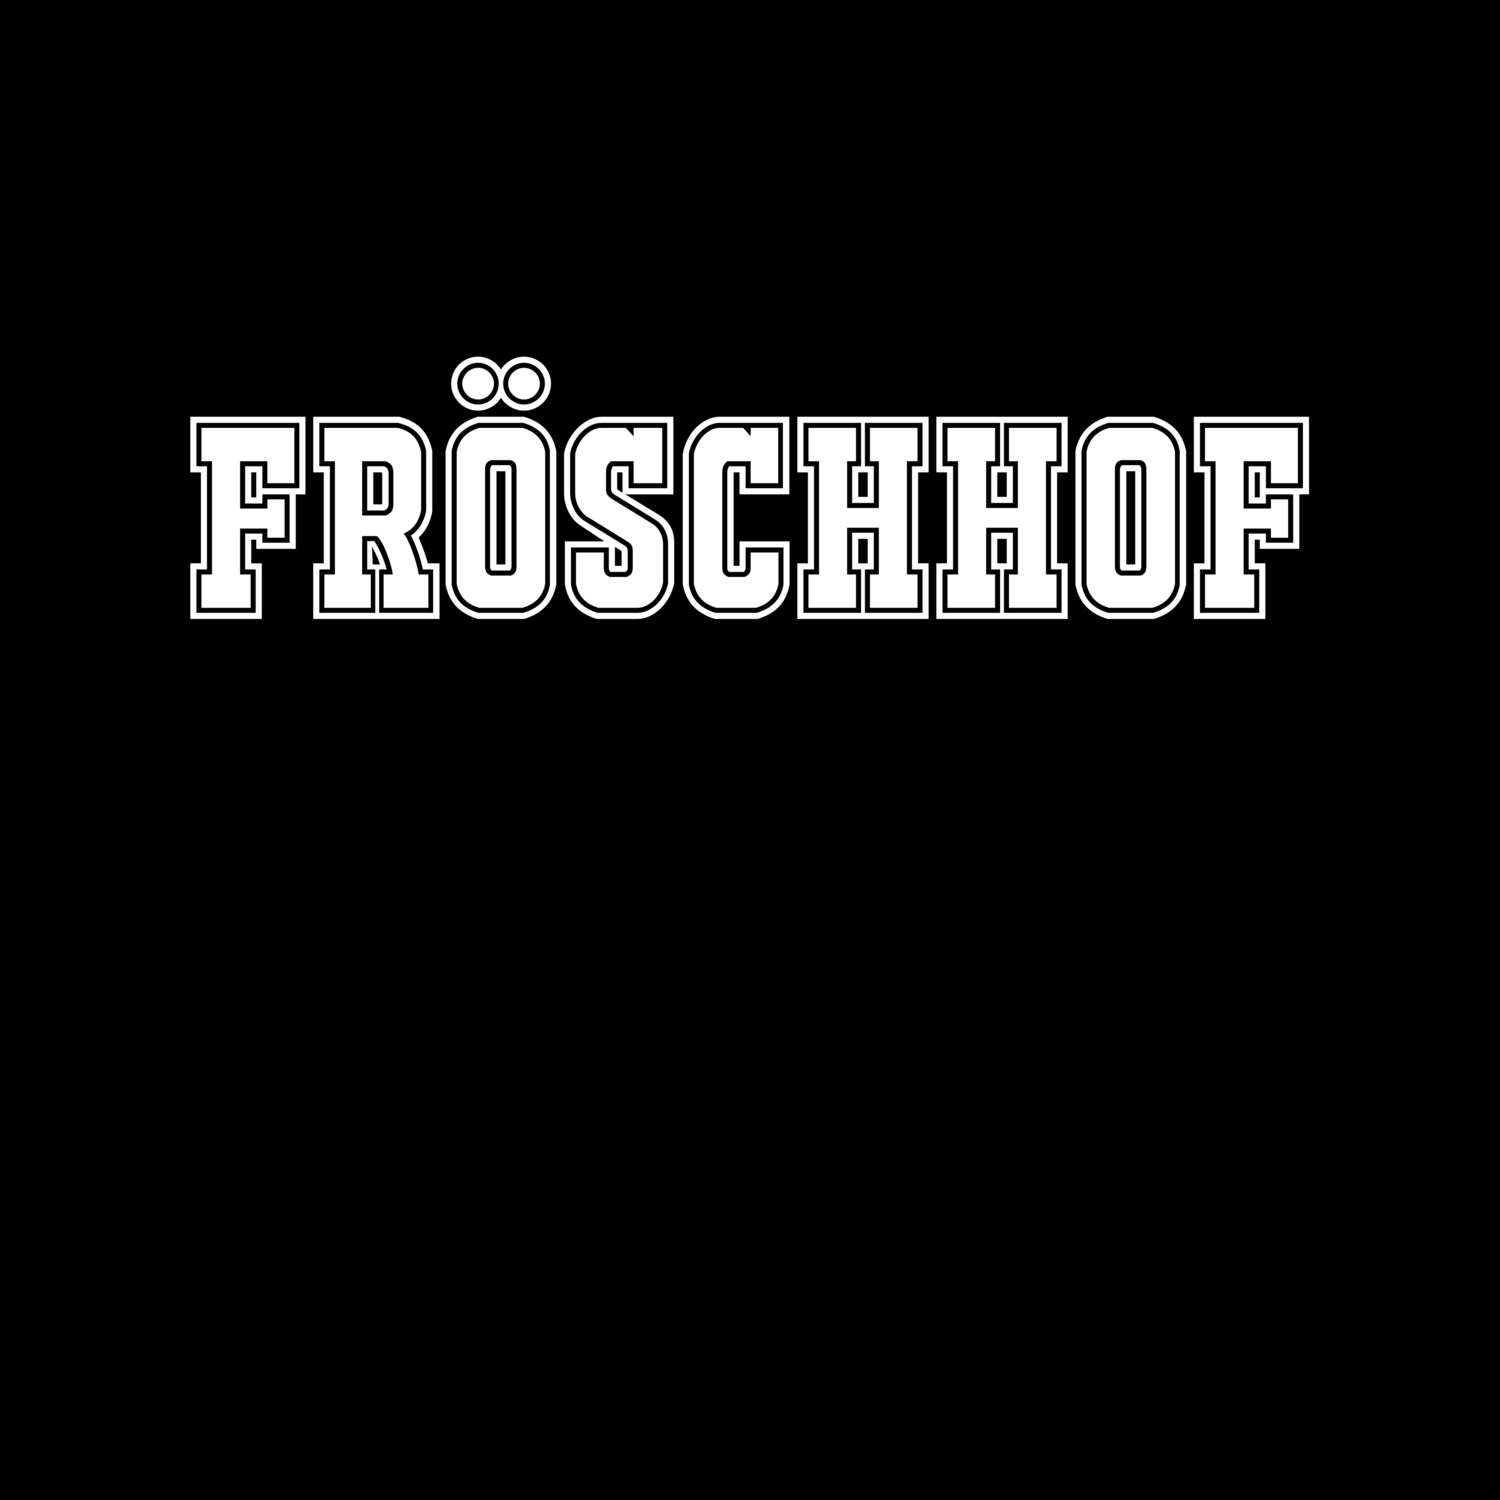 Fröschhof T-Shirt »Classic«